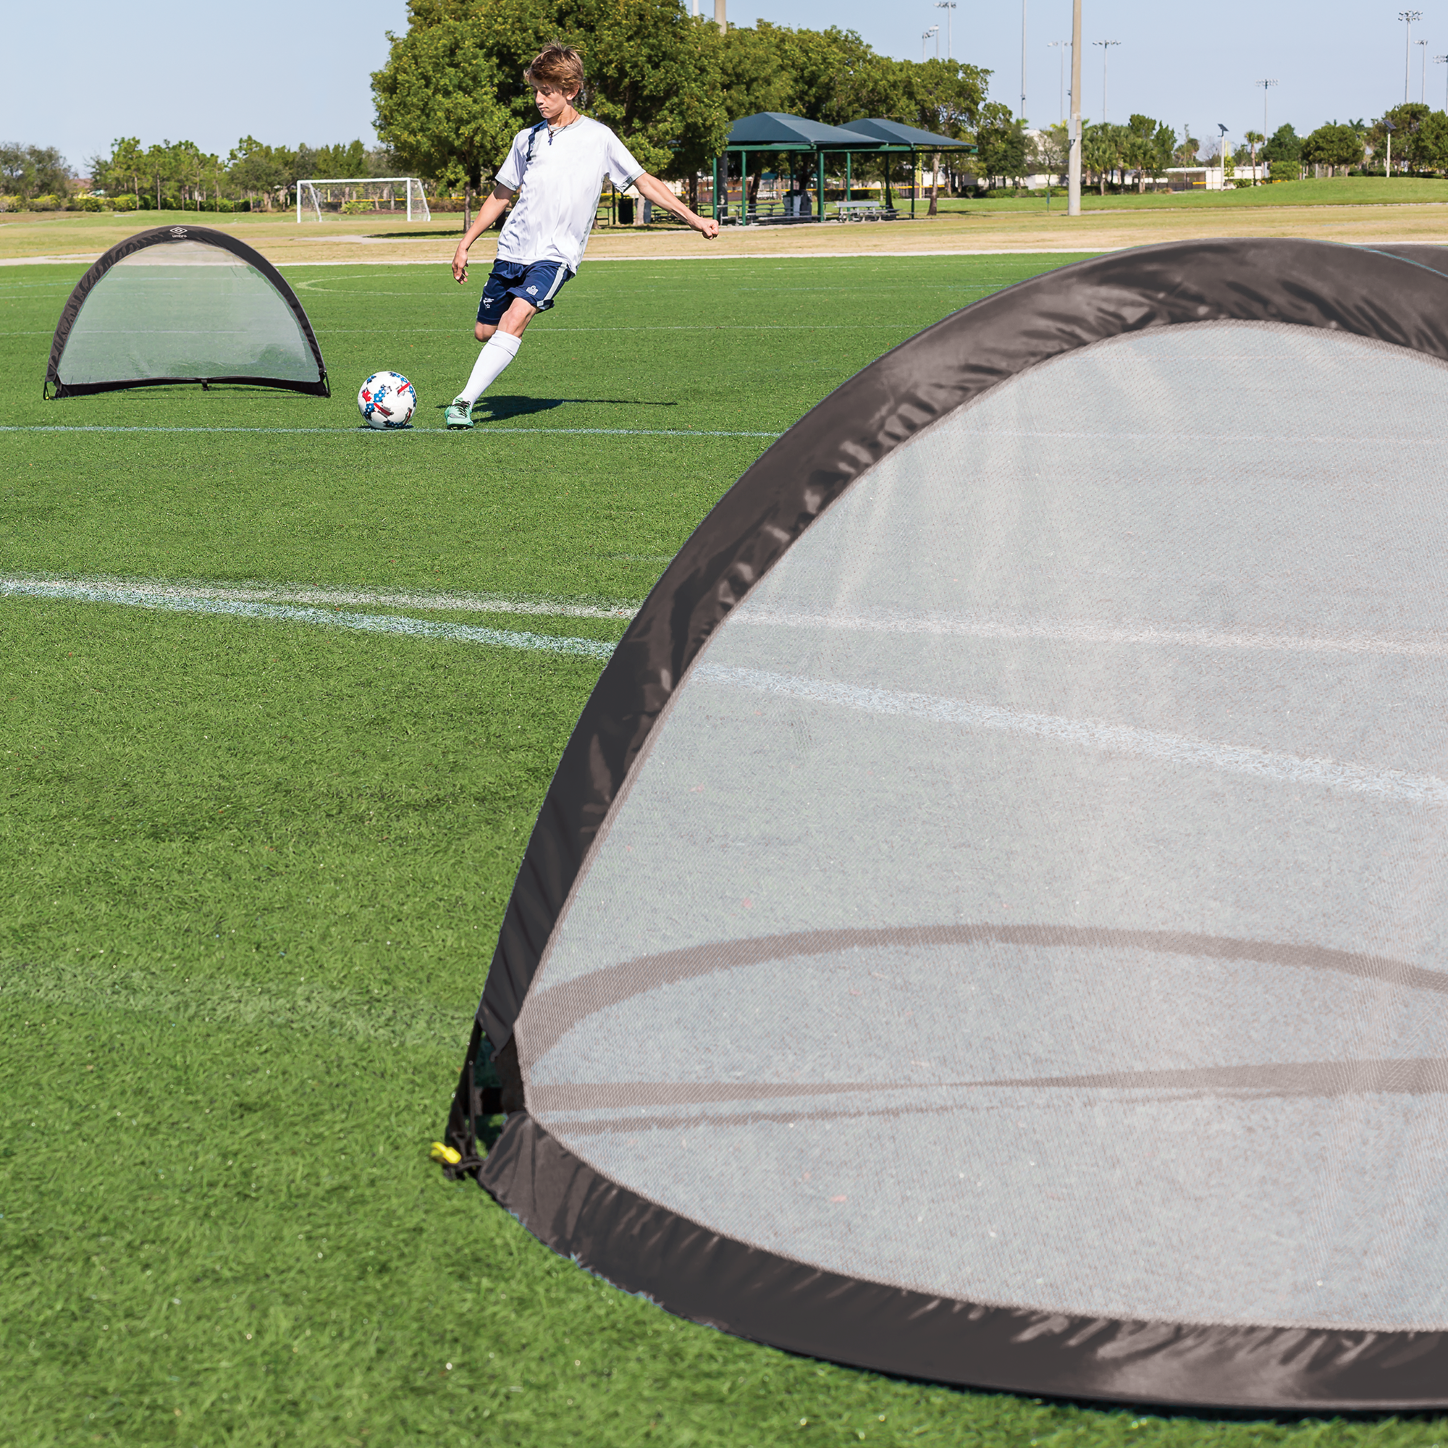 Umbro 3' x 2' Pop-up Soccer Goal Net Set - Portable 2 Goal Set with Carry Bag - image 4 of 5